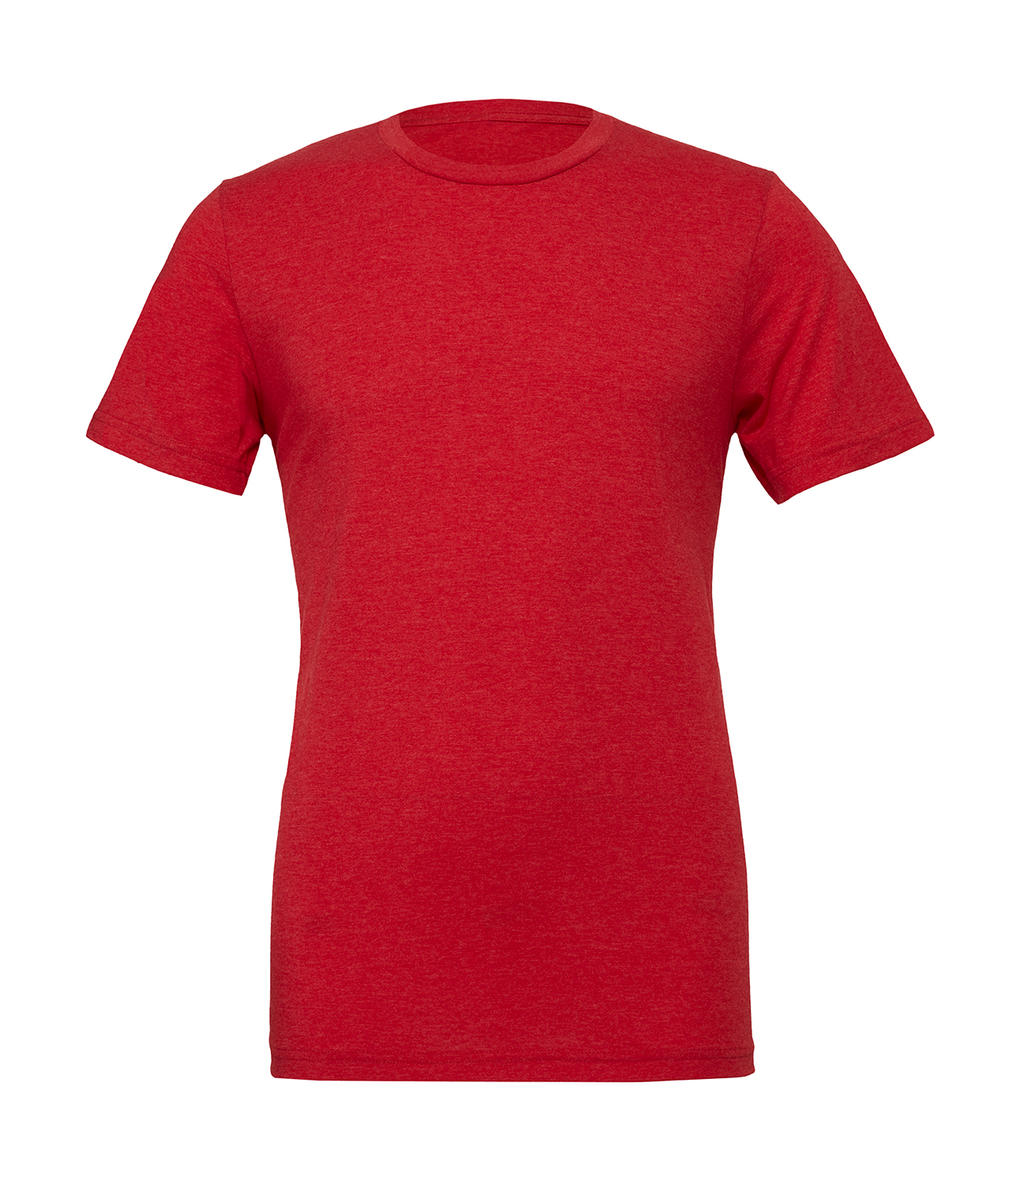 Unisex tričko Triblend - red triblend